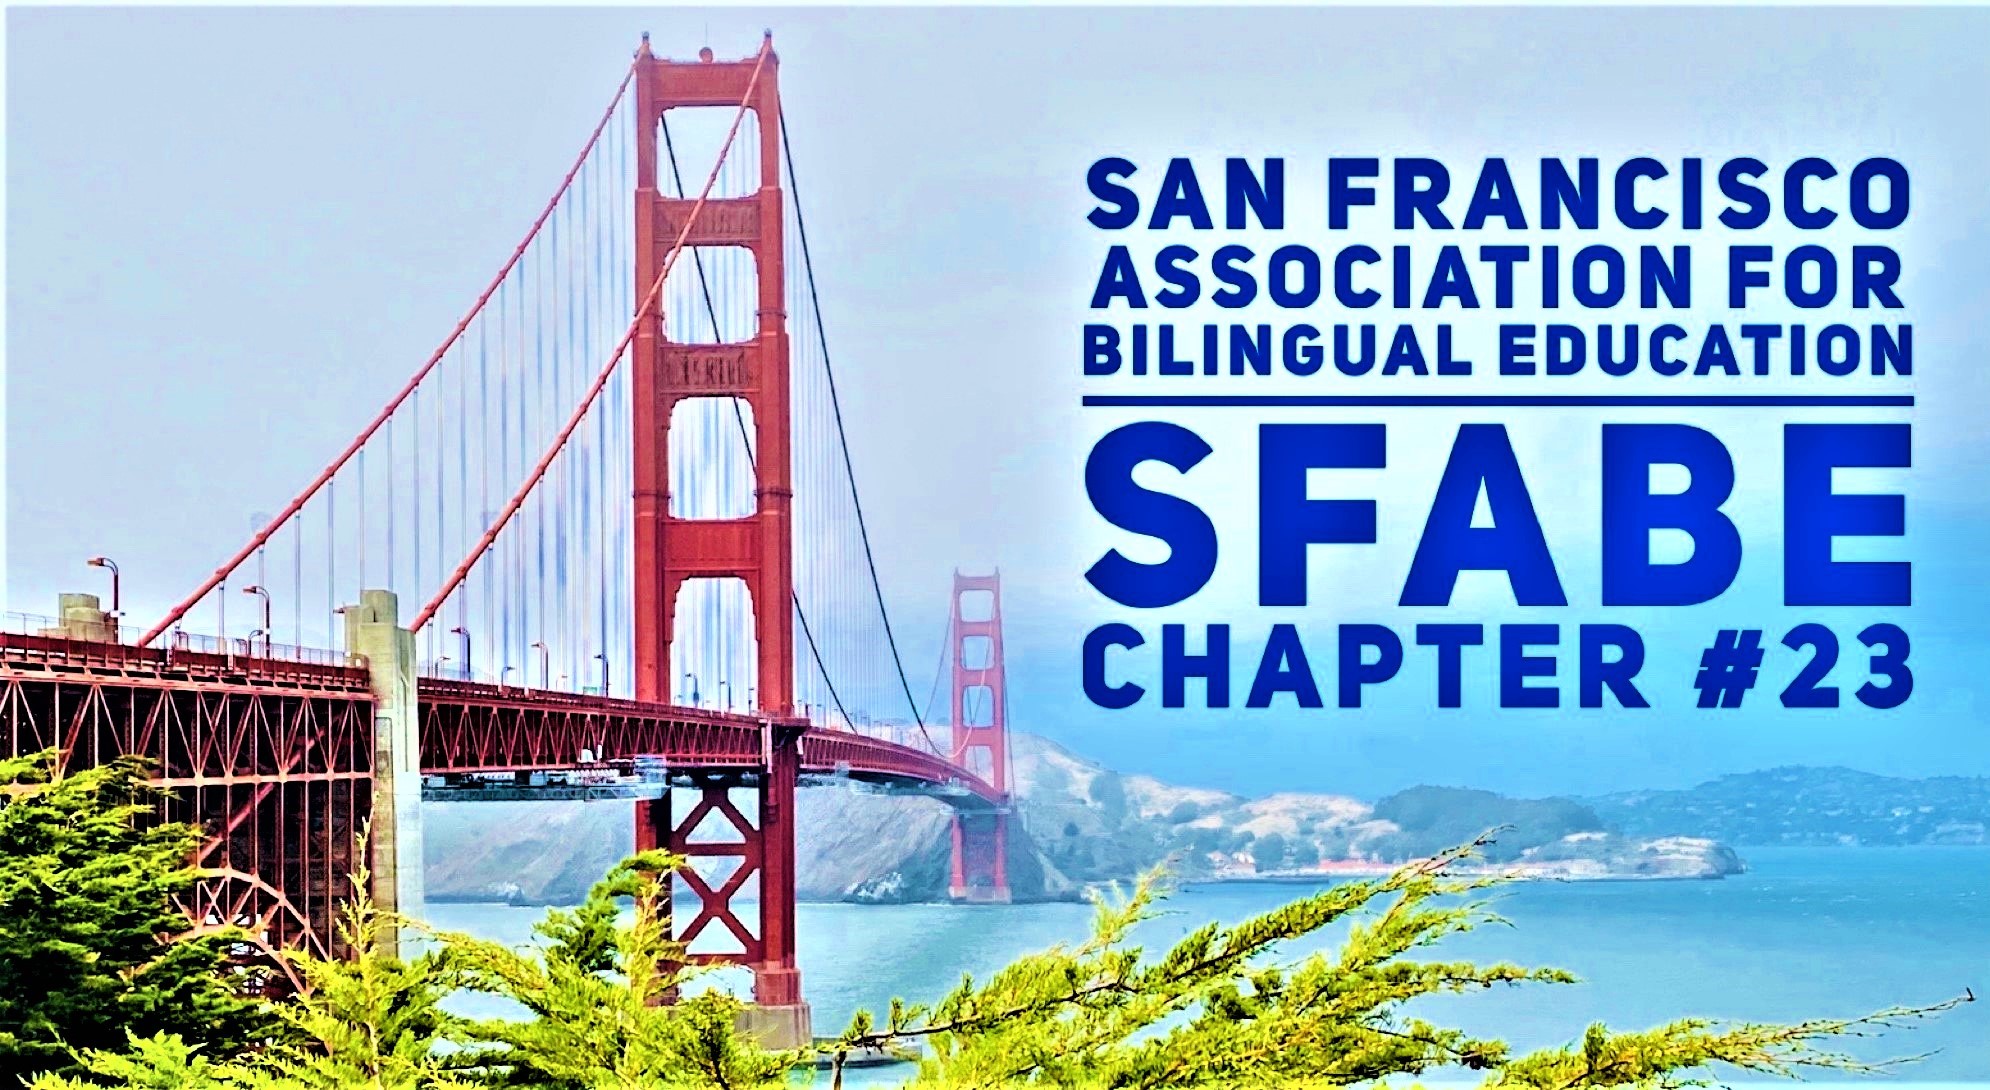 San Francisco Association for Bilingual Education